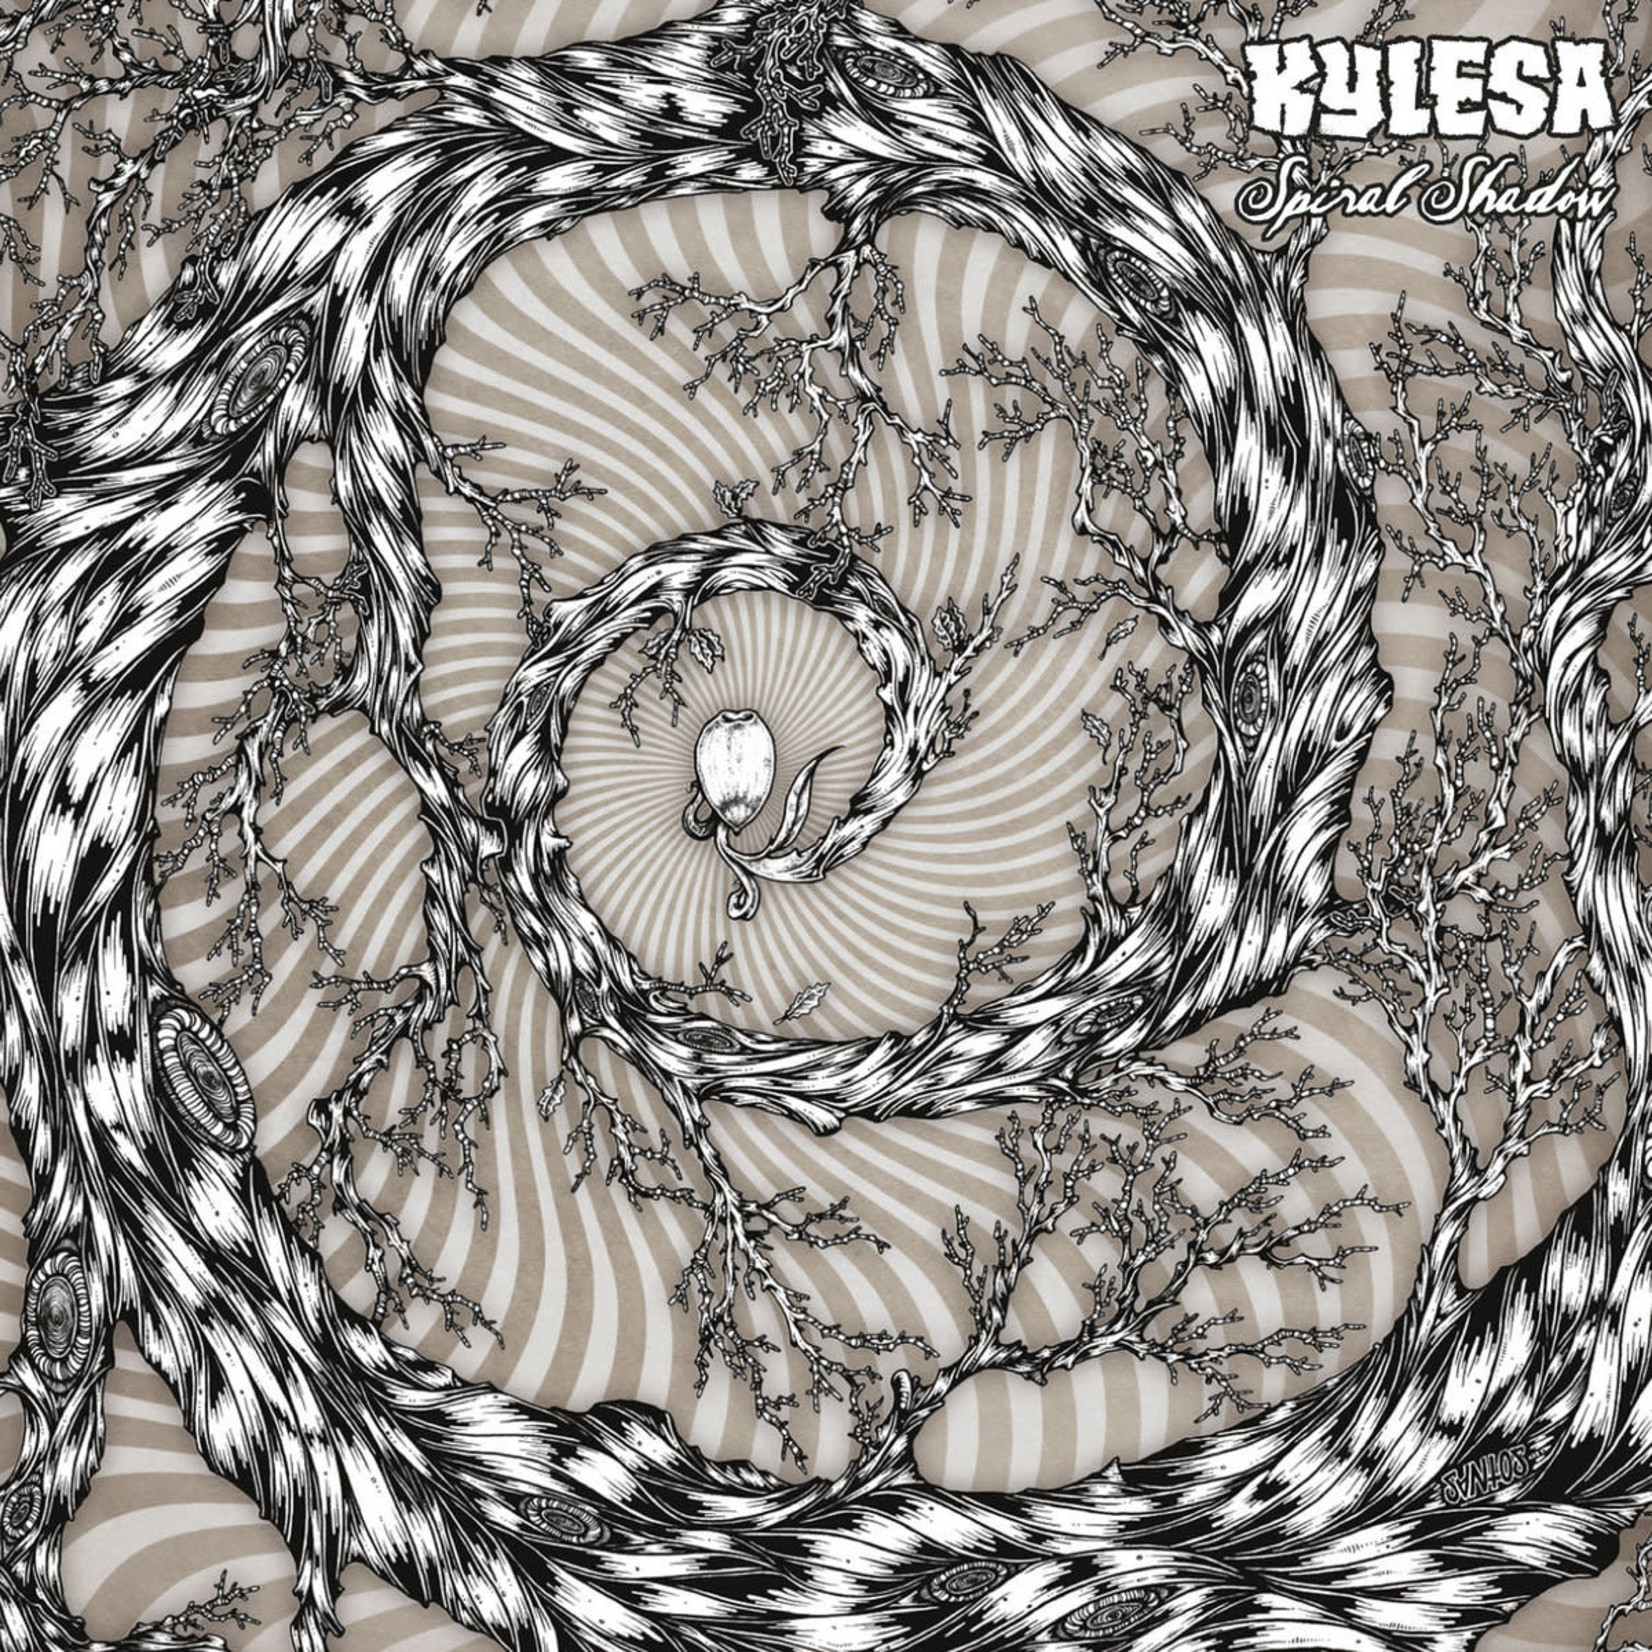 [New] Kylesa - Spiral Shadow (limted brown vinyl)